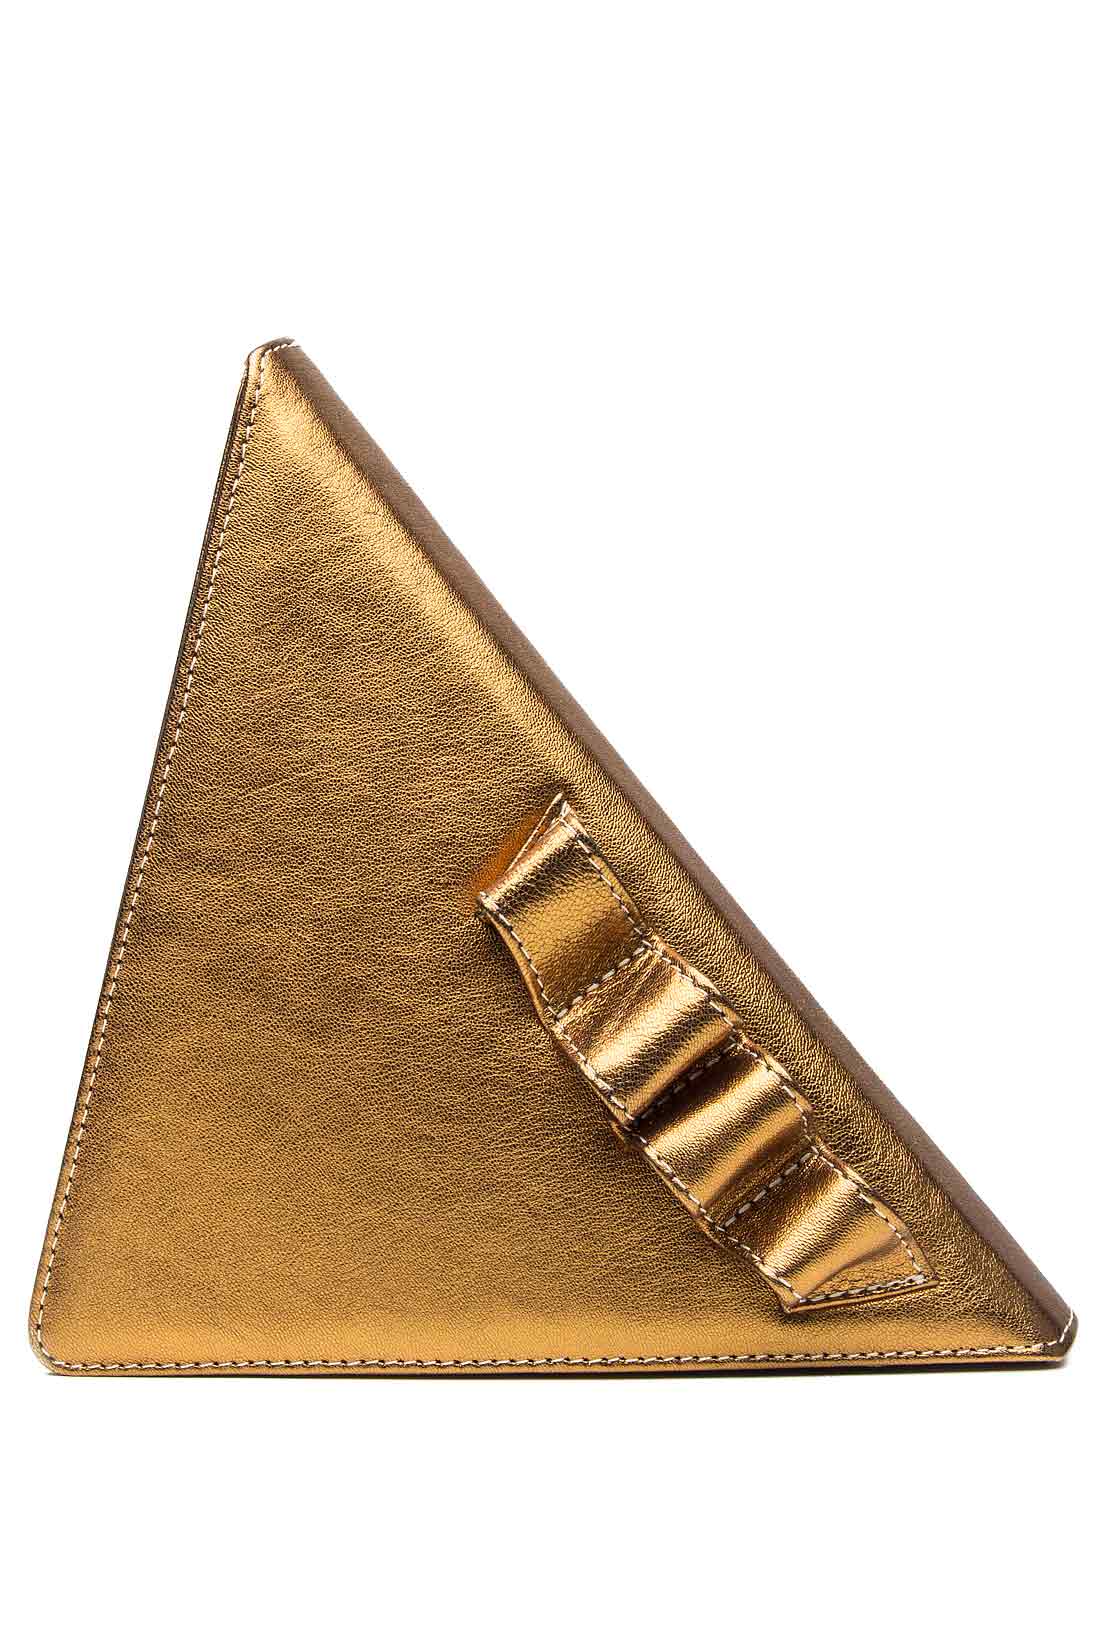 Leather triangle clutch Laura Olaru image 1